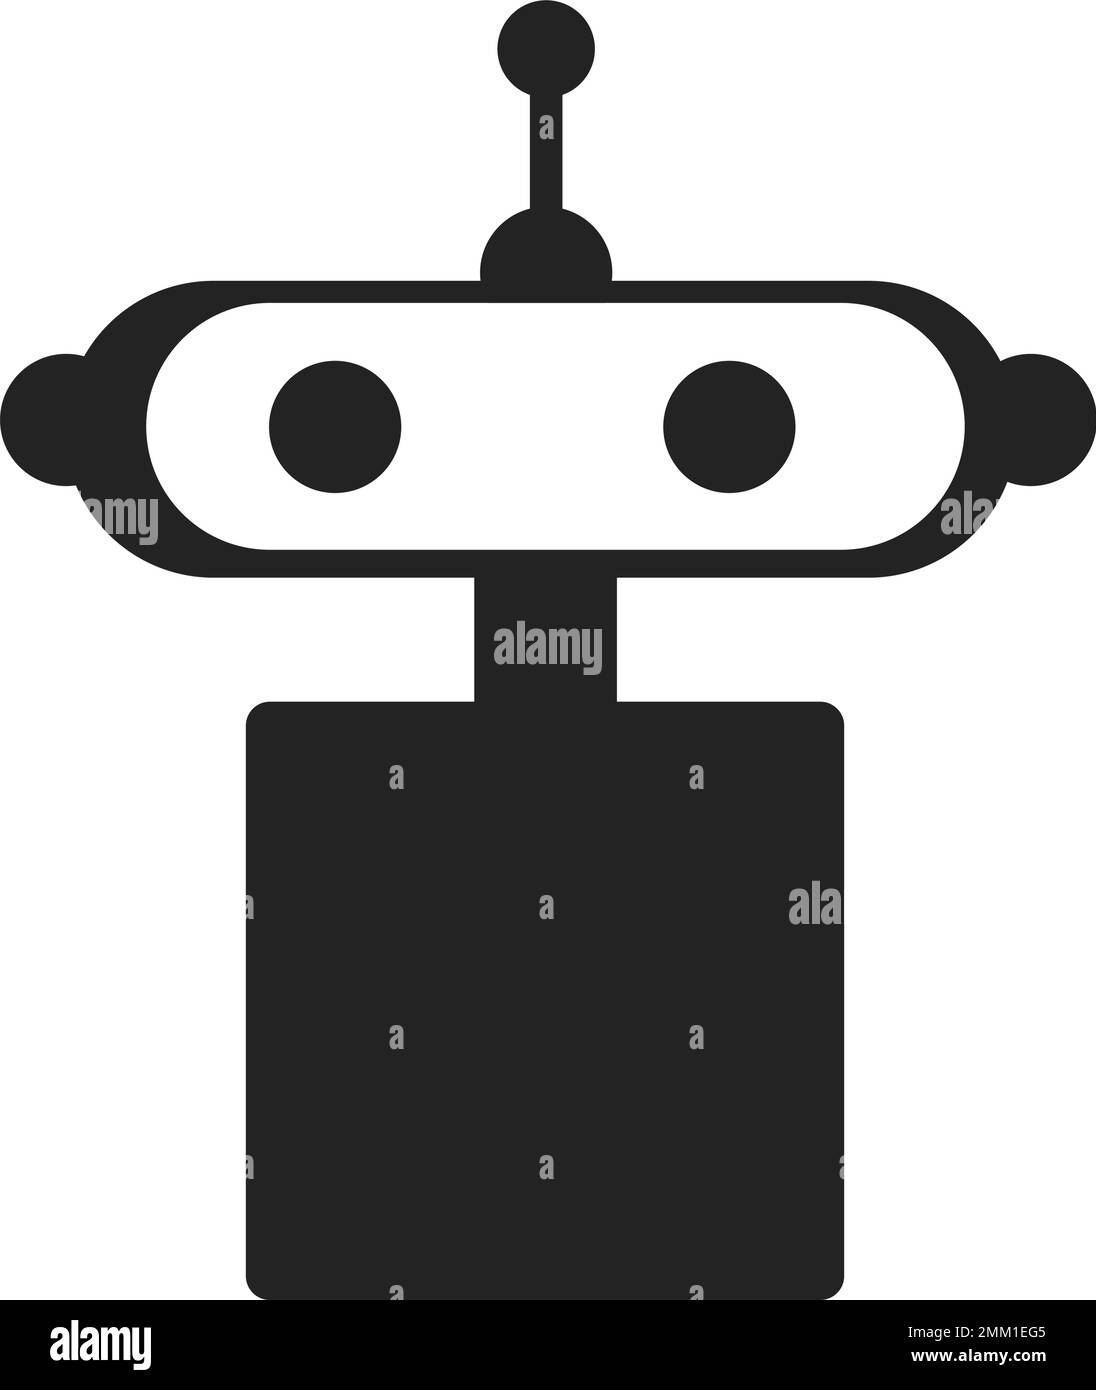 Robot en el teléfono inteligente concepto de chatbot con ai ai generado